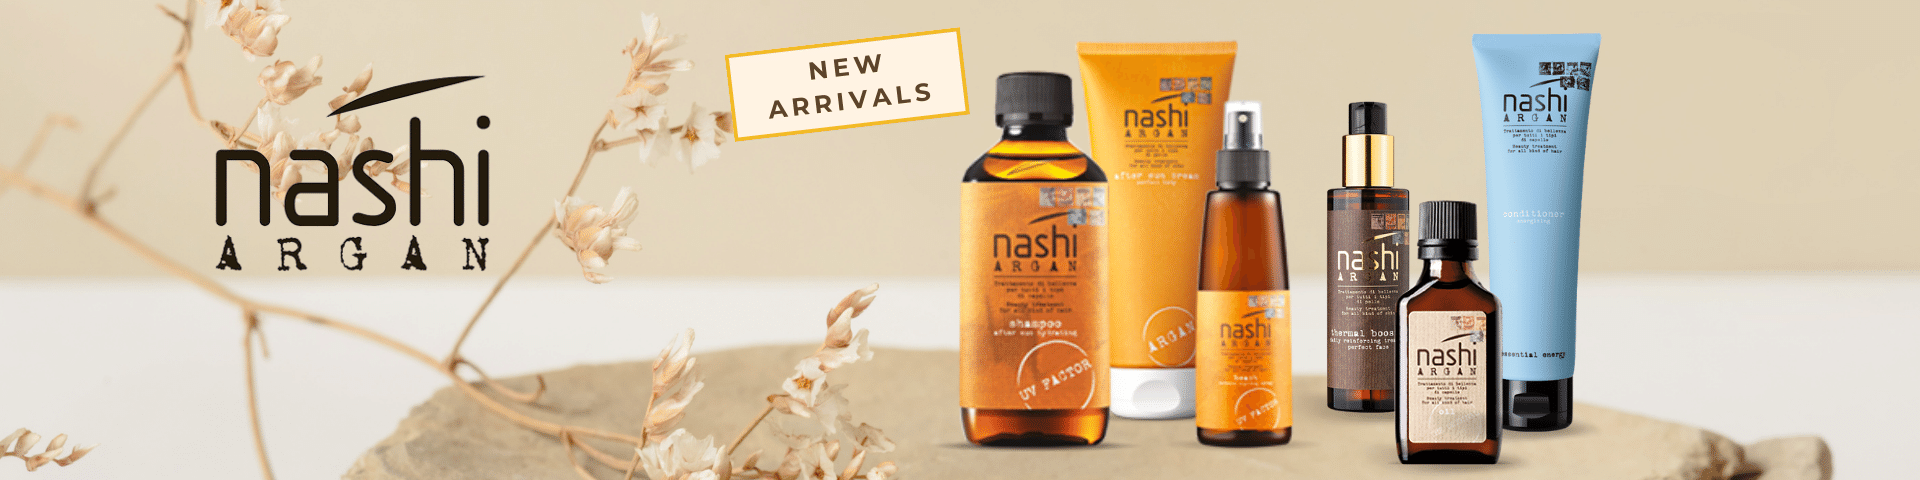 Nashi Argan Produkte bei Belando